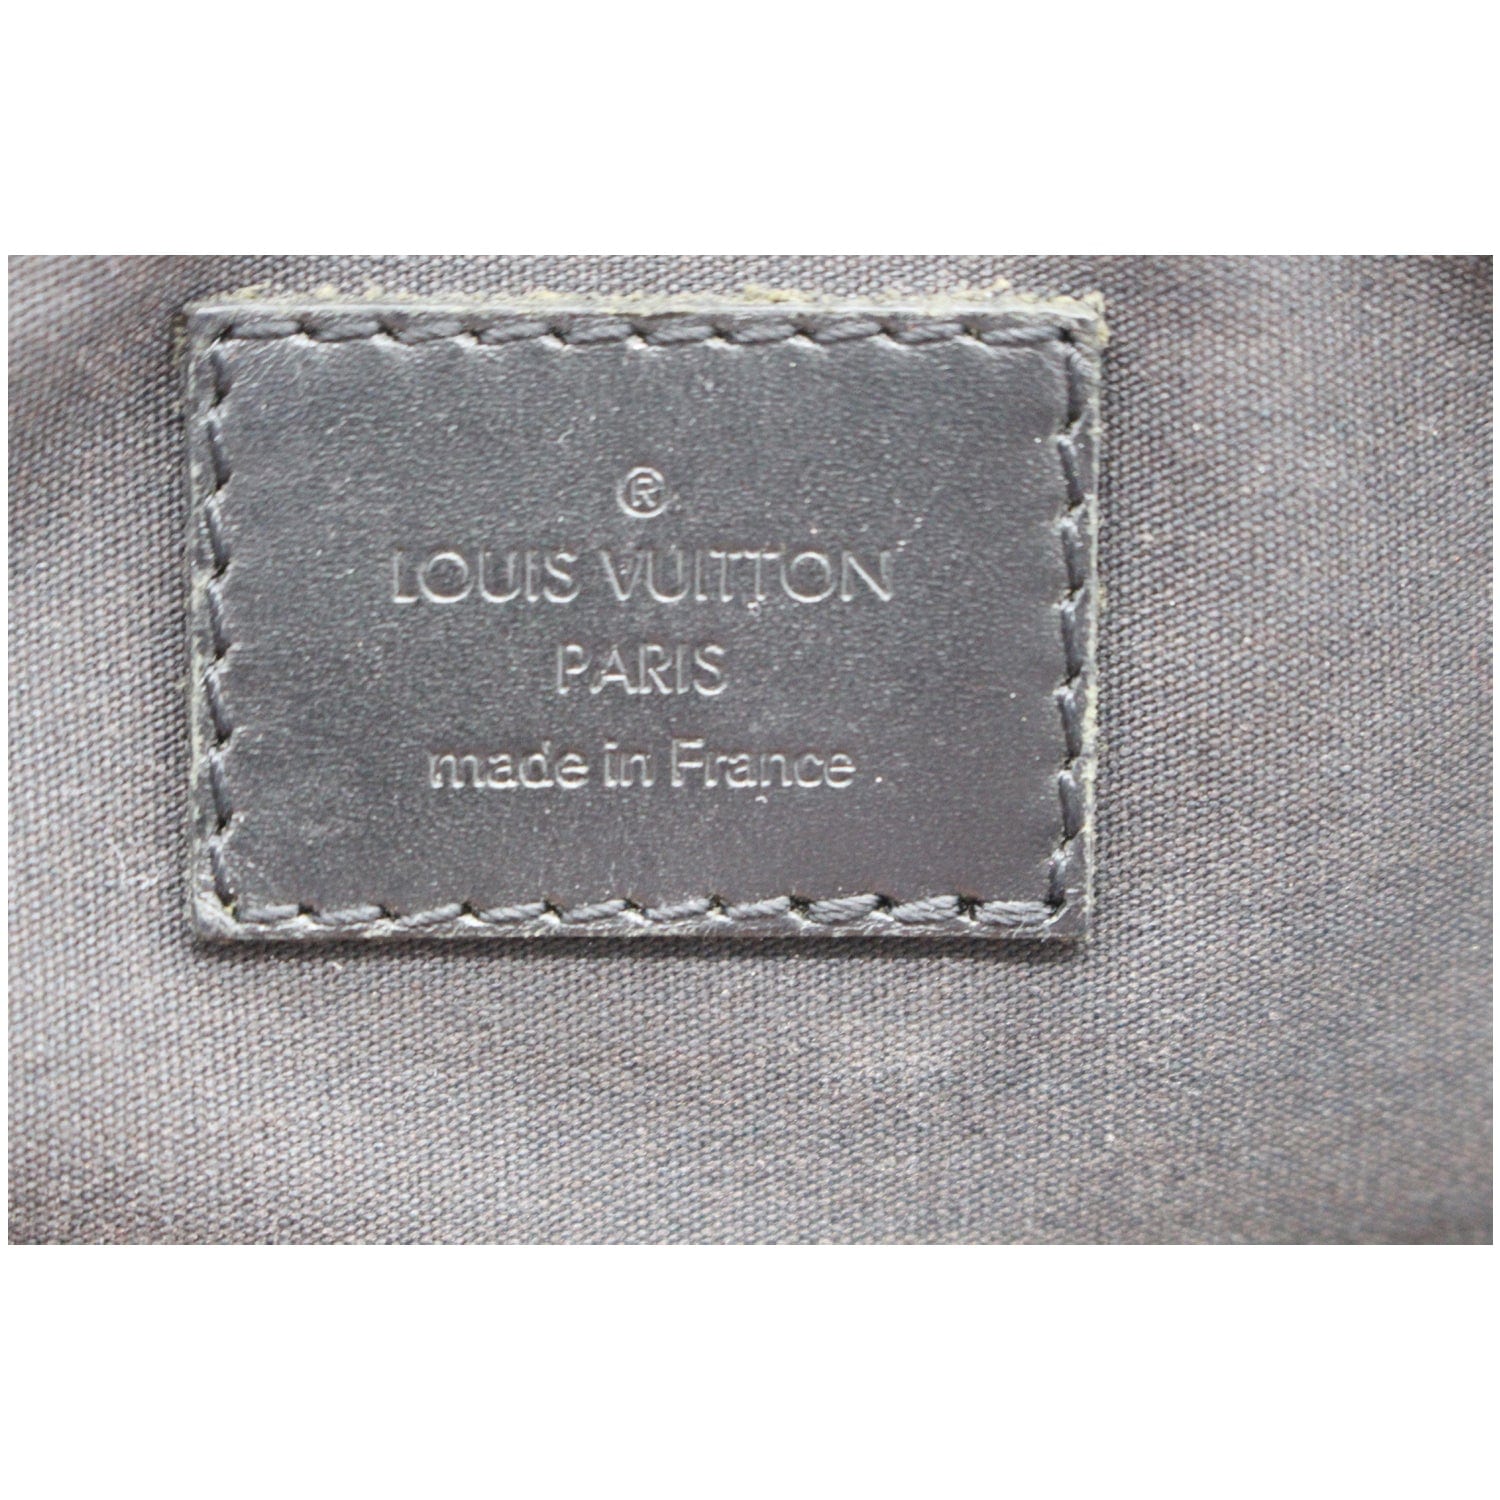 FONDATION LOUIS VUITTON Tote Bag & Clutch Bag Gray New